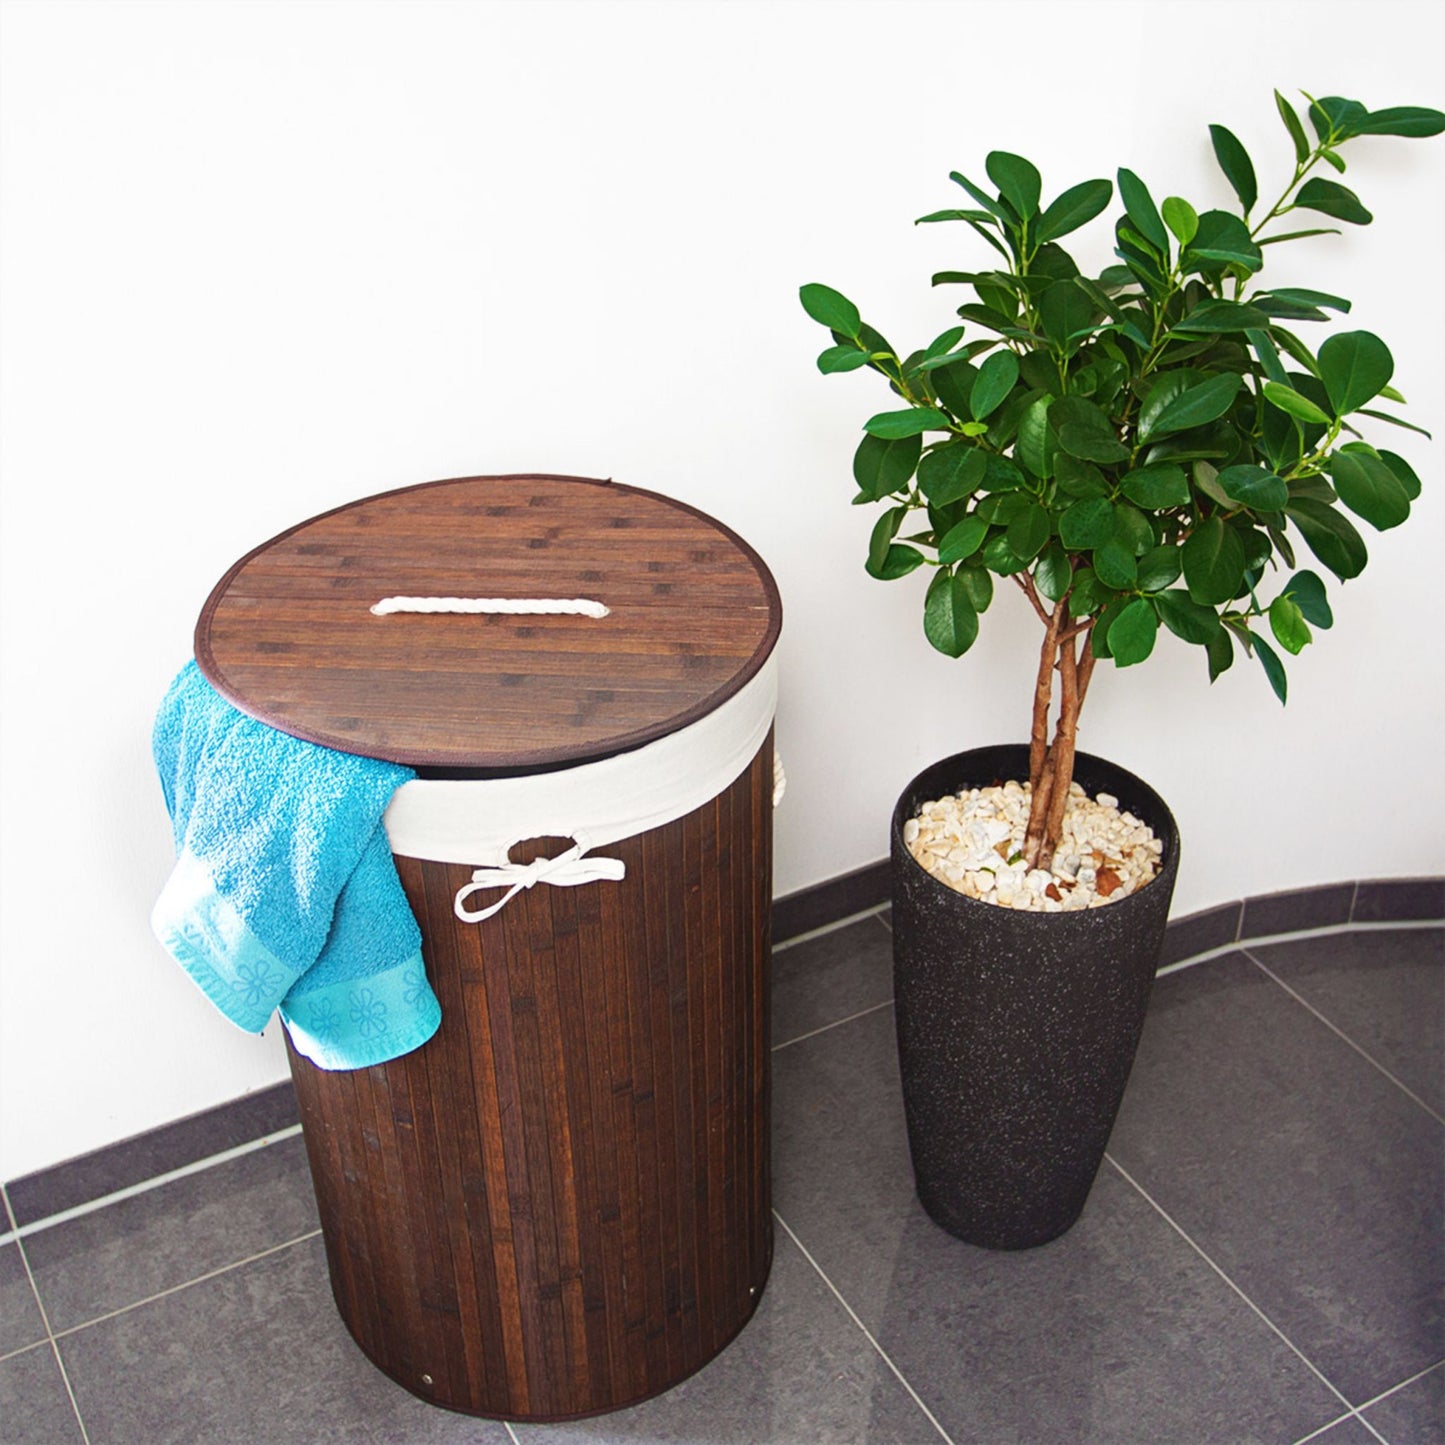 RelaxDays Round Bamboo Hamper Bamboo Bathrooms